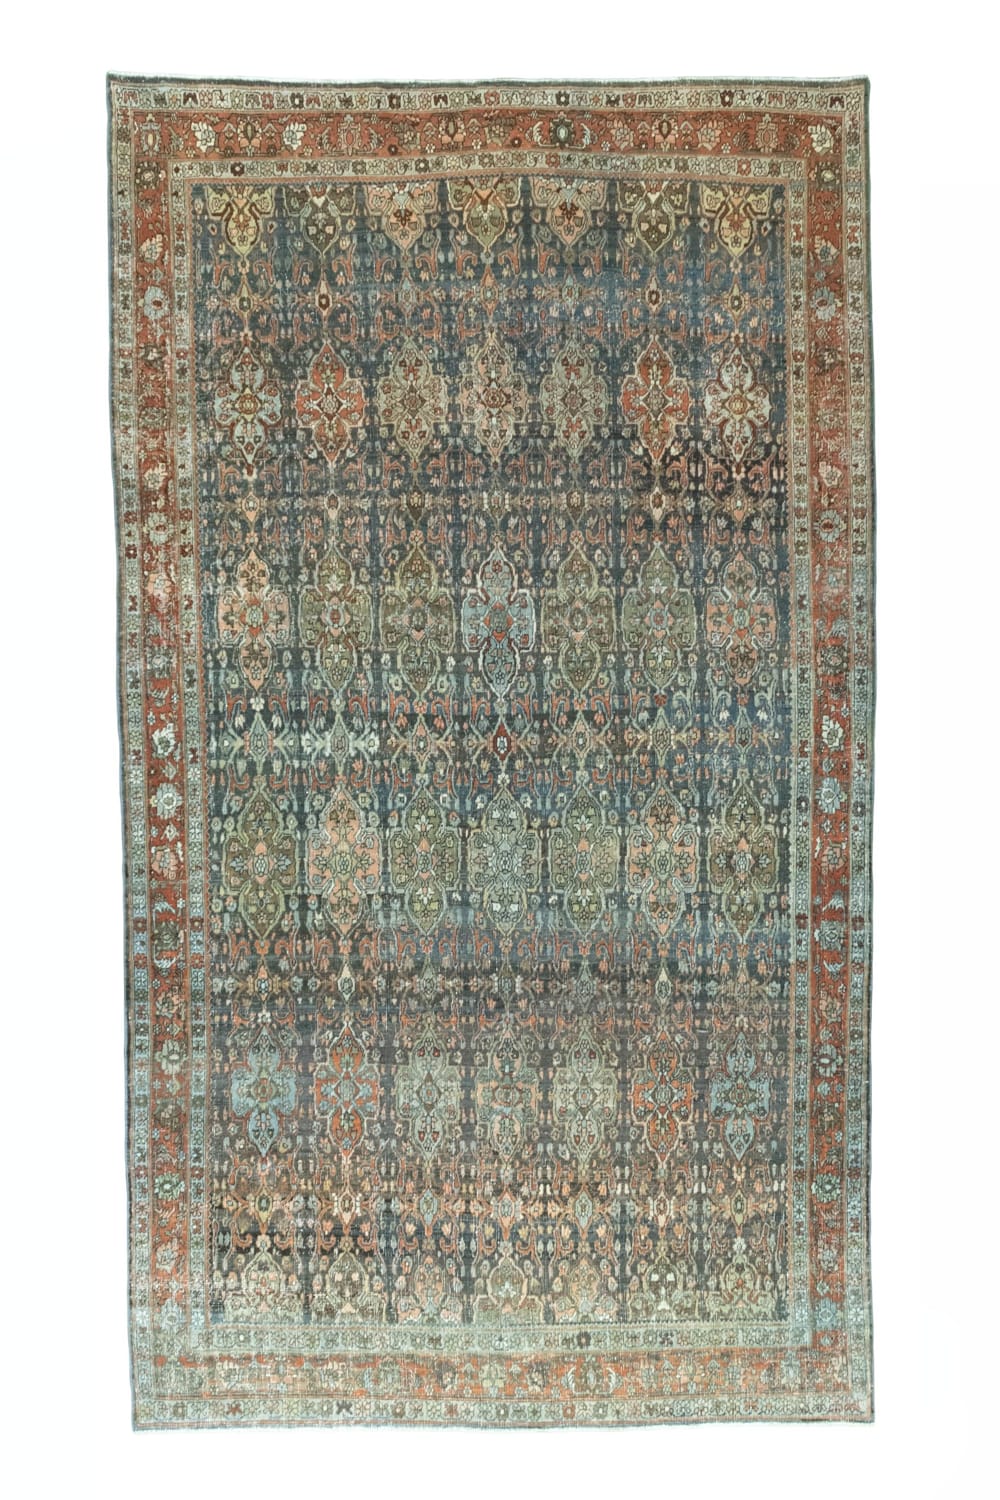 Rug# 49639, antique Bijar, Kurdistan, circa 1920, fine wool pile, natural vegetable dyes, immaculate, Persia, size 338x190 cm